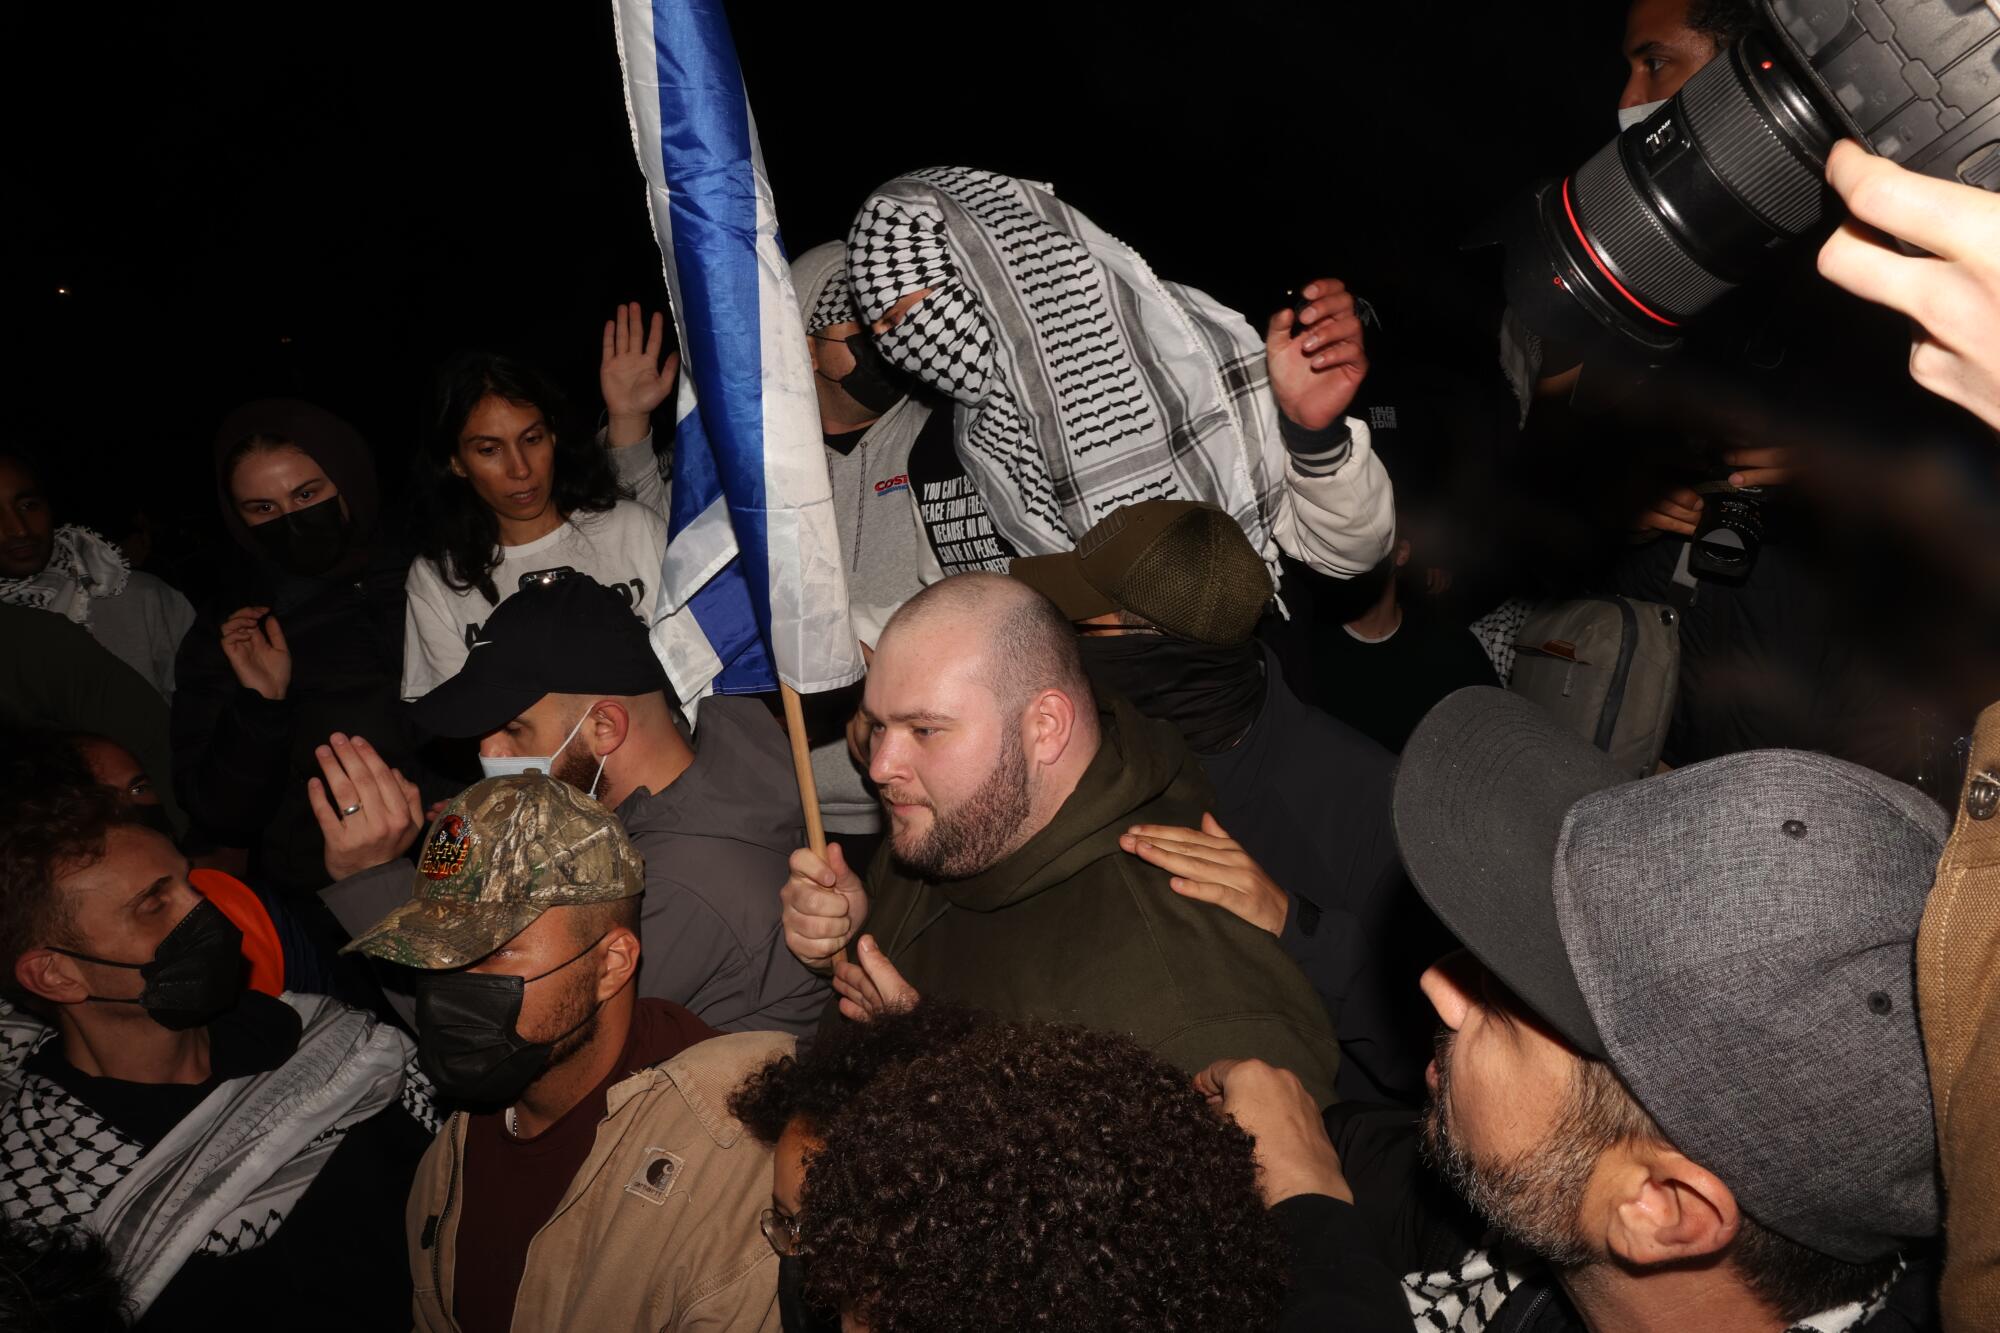 Pro-Palestine and pro-Israel demonstrators scuffle near a pro-Palestine encampment outside of Royce Hall at UCLA.